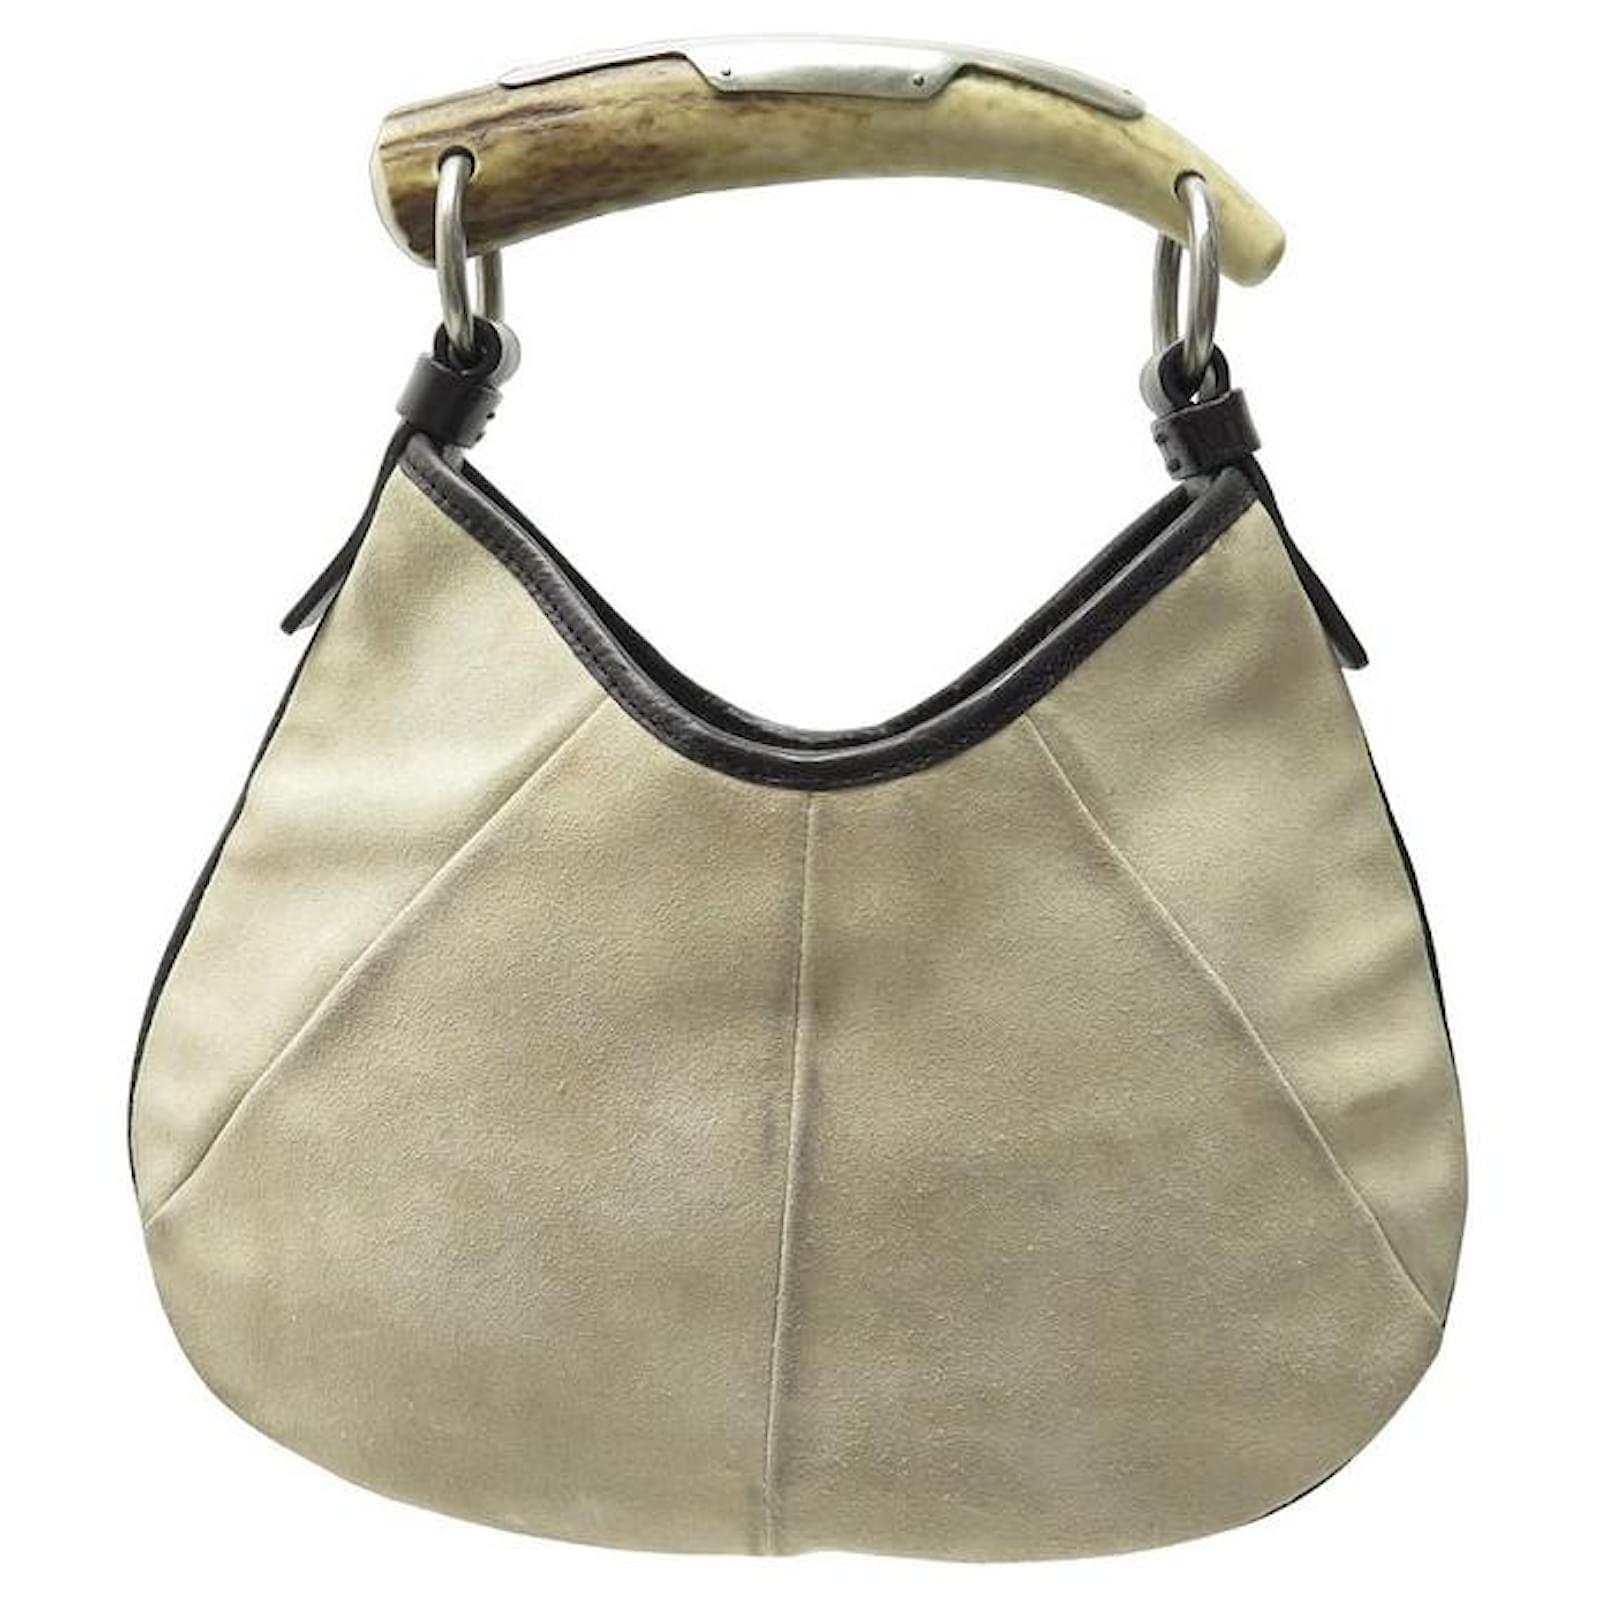 Mombasa leather handbag